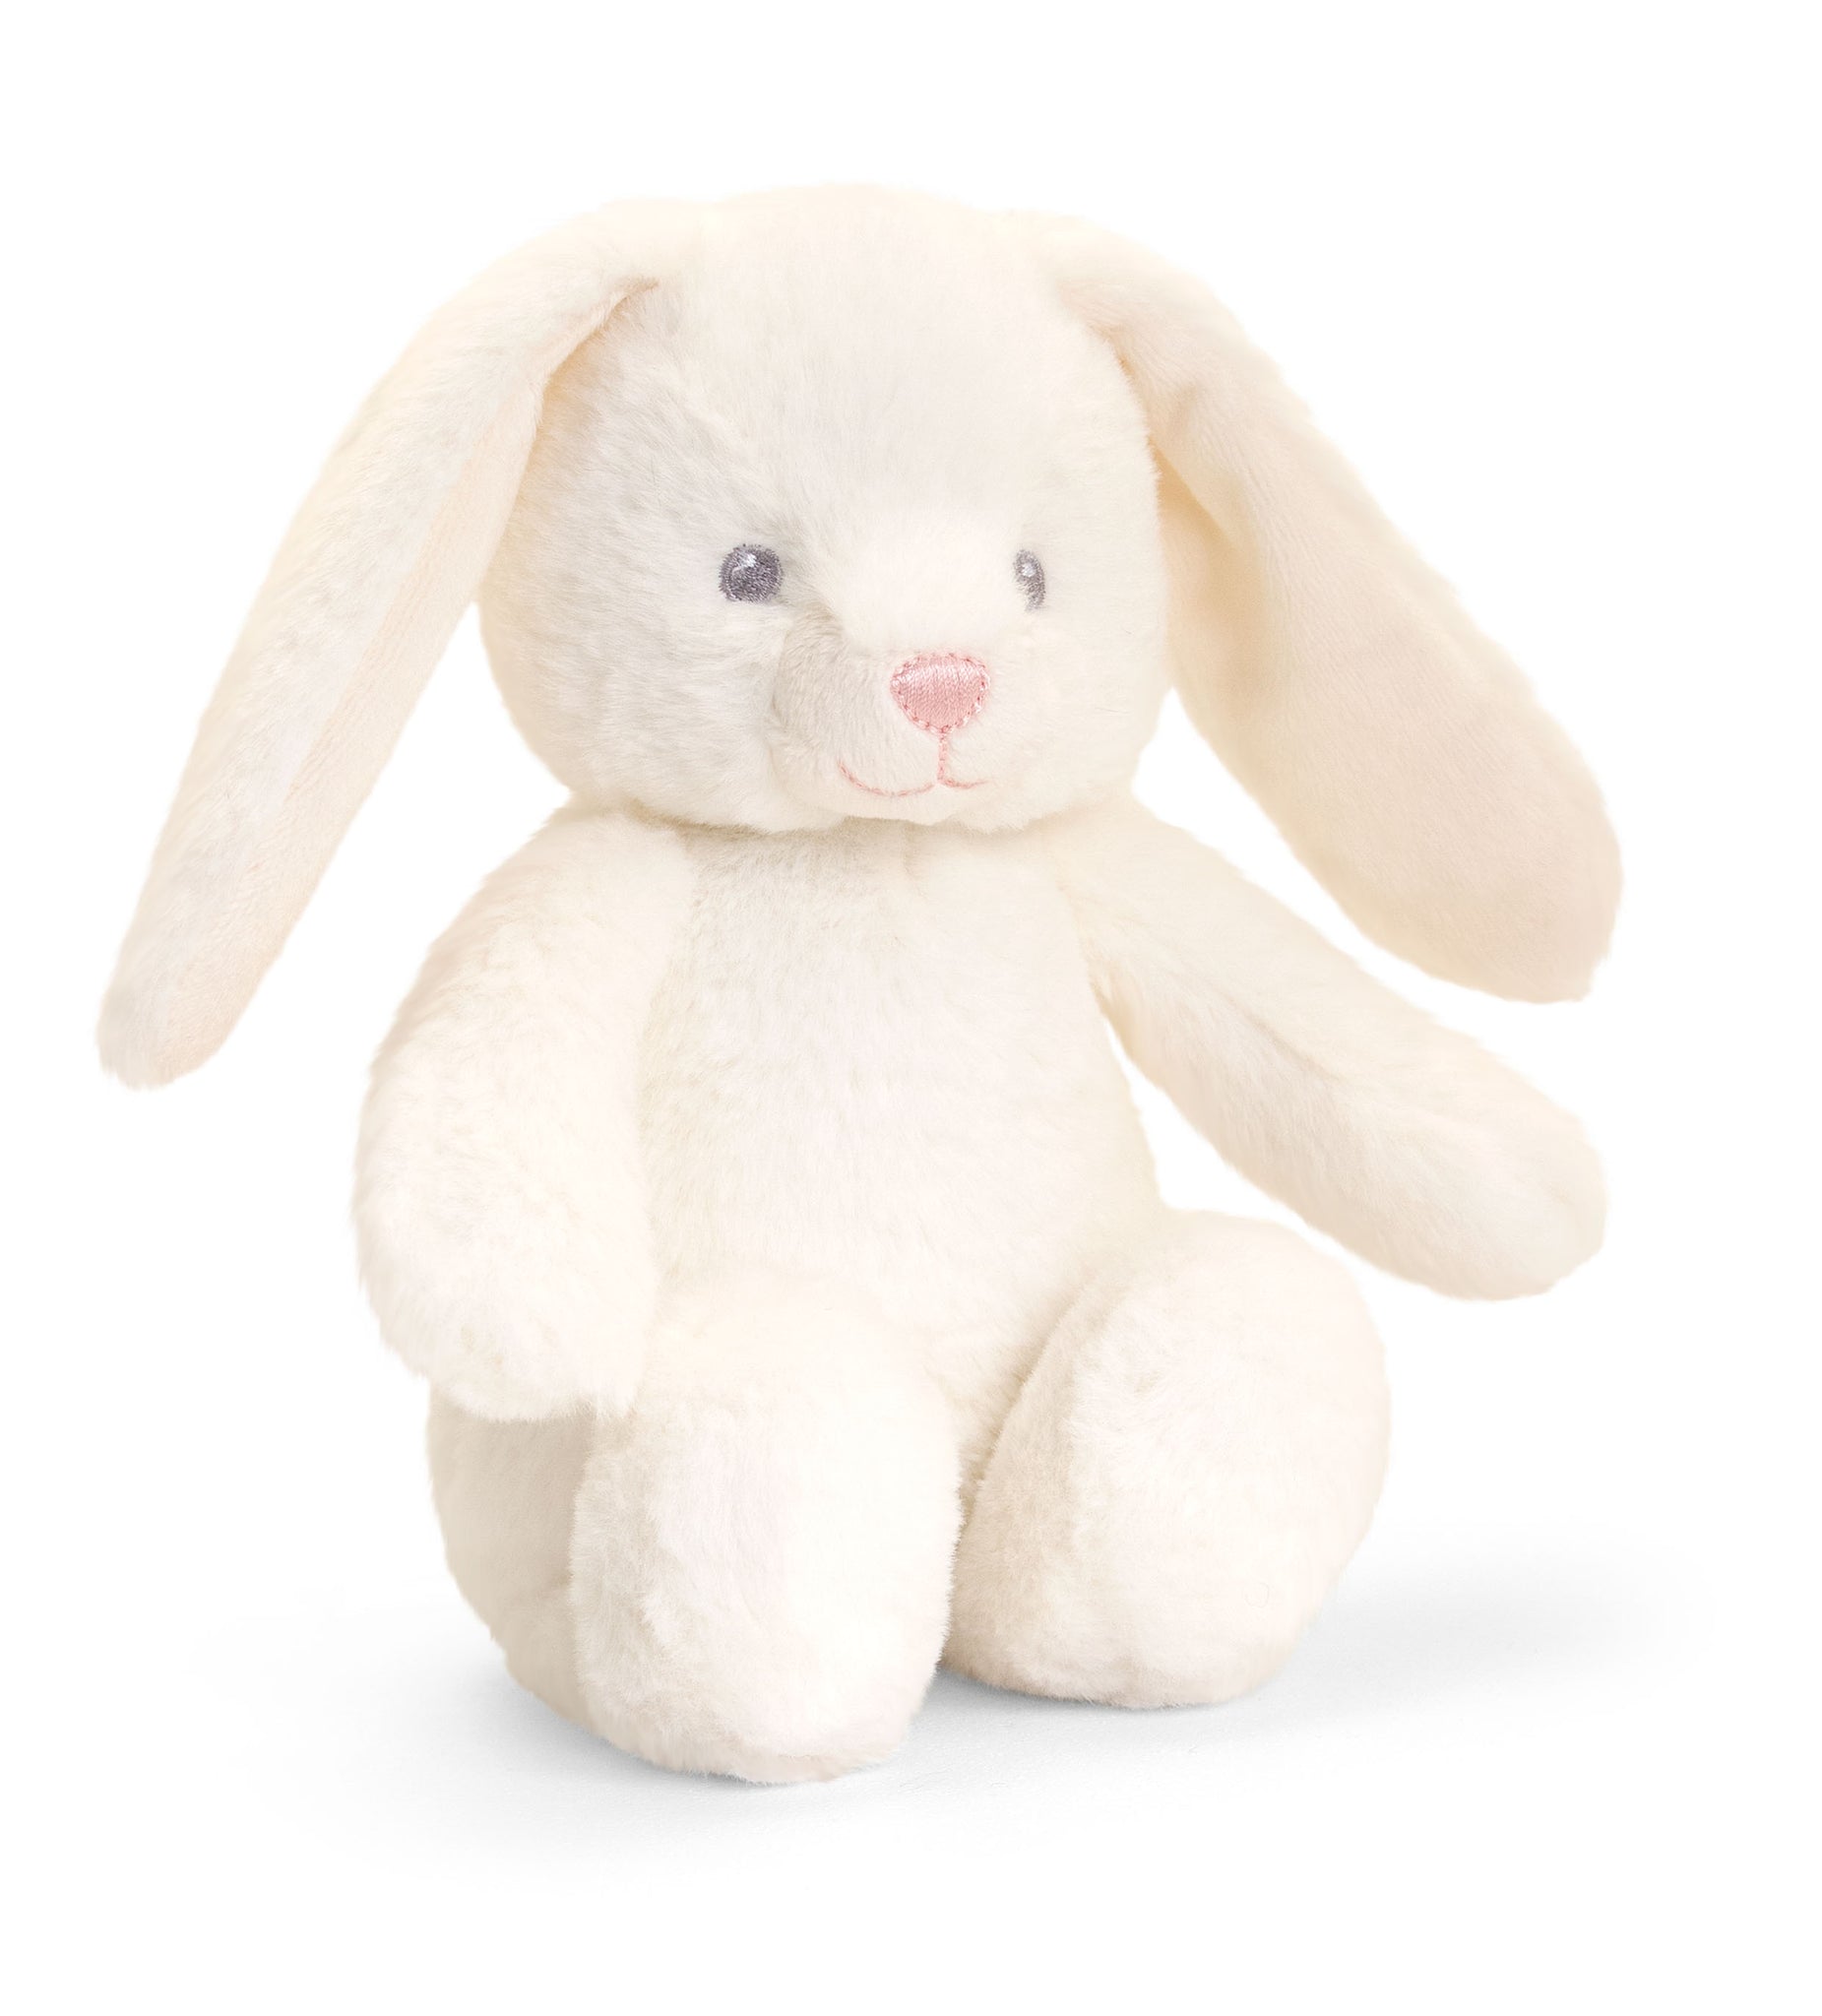 Baby Bunny Plush Toy